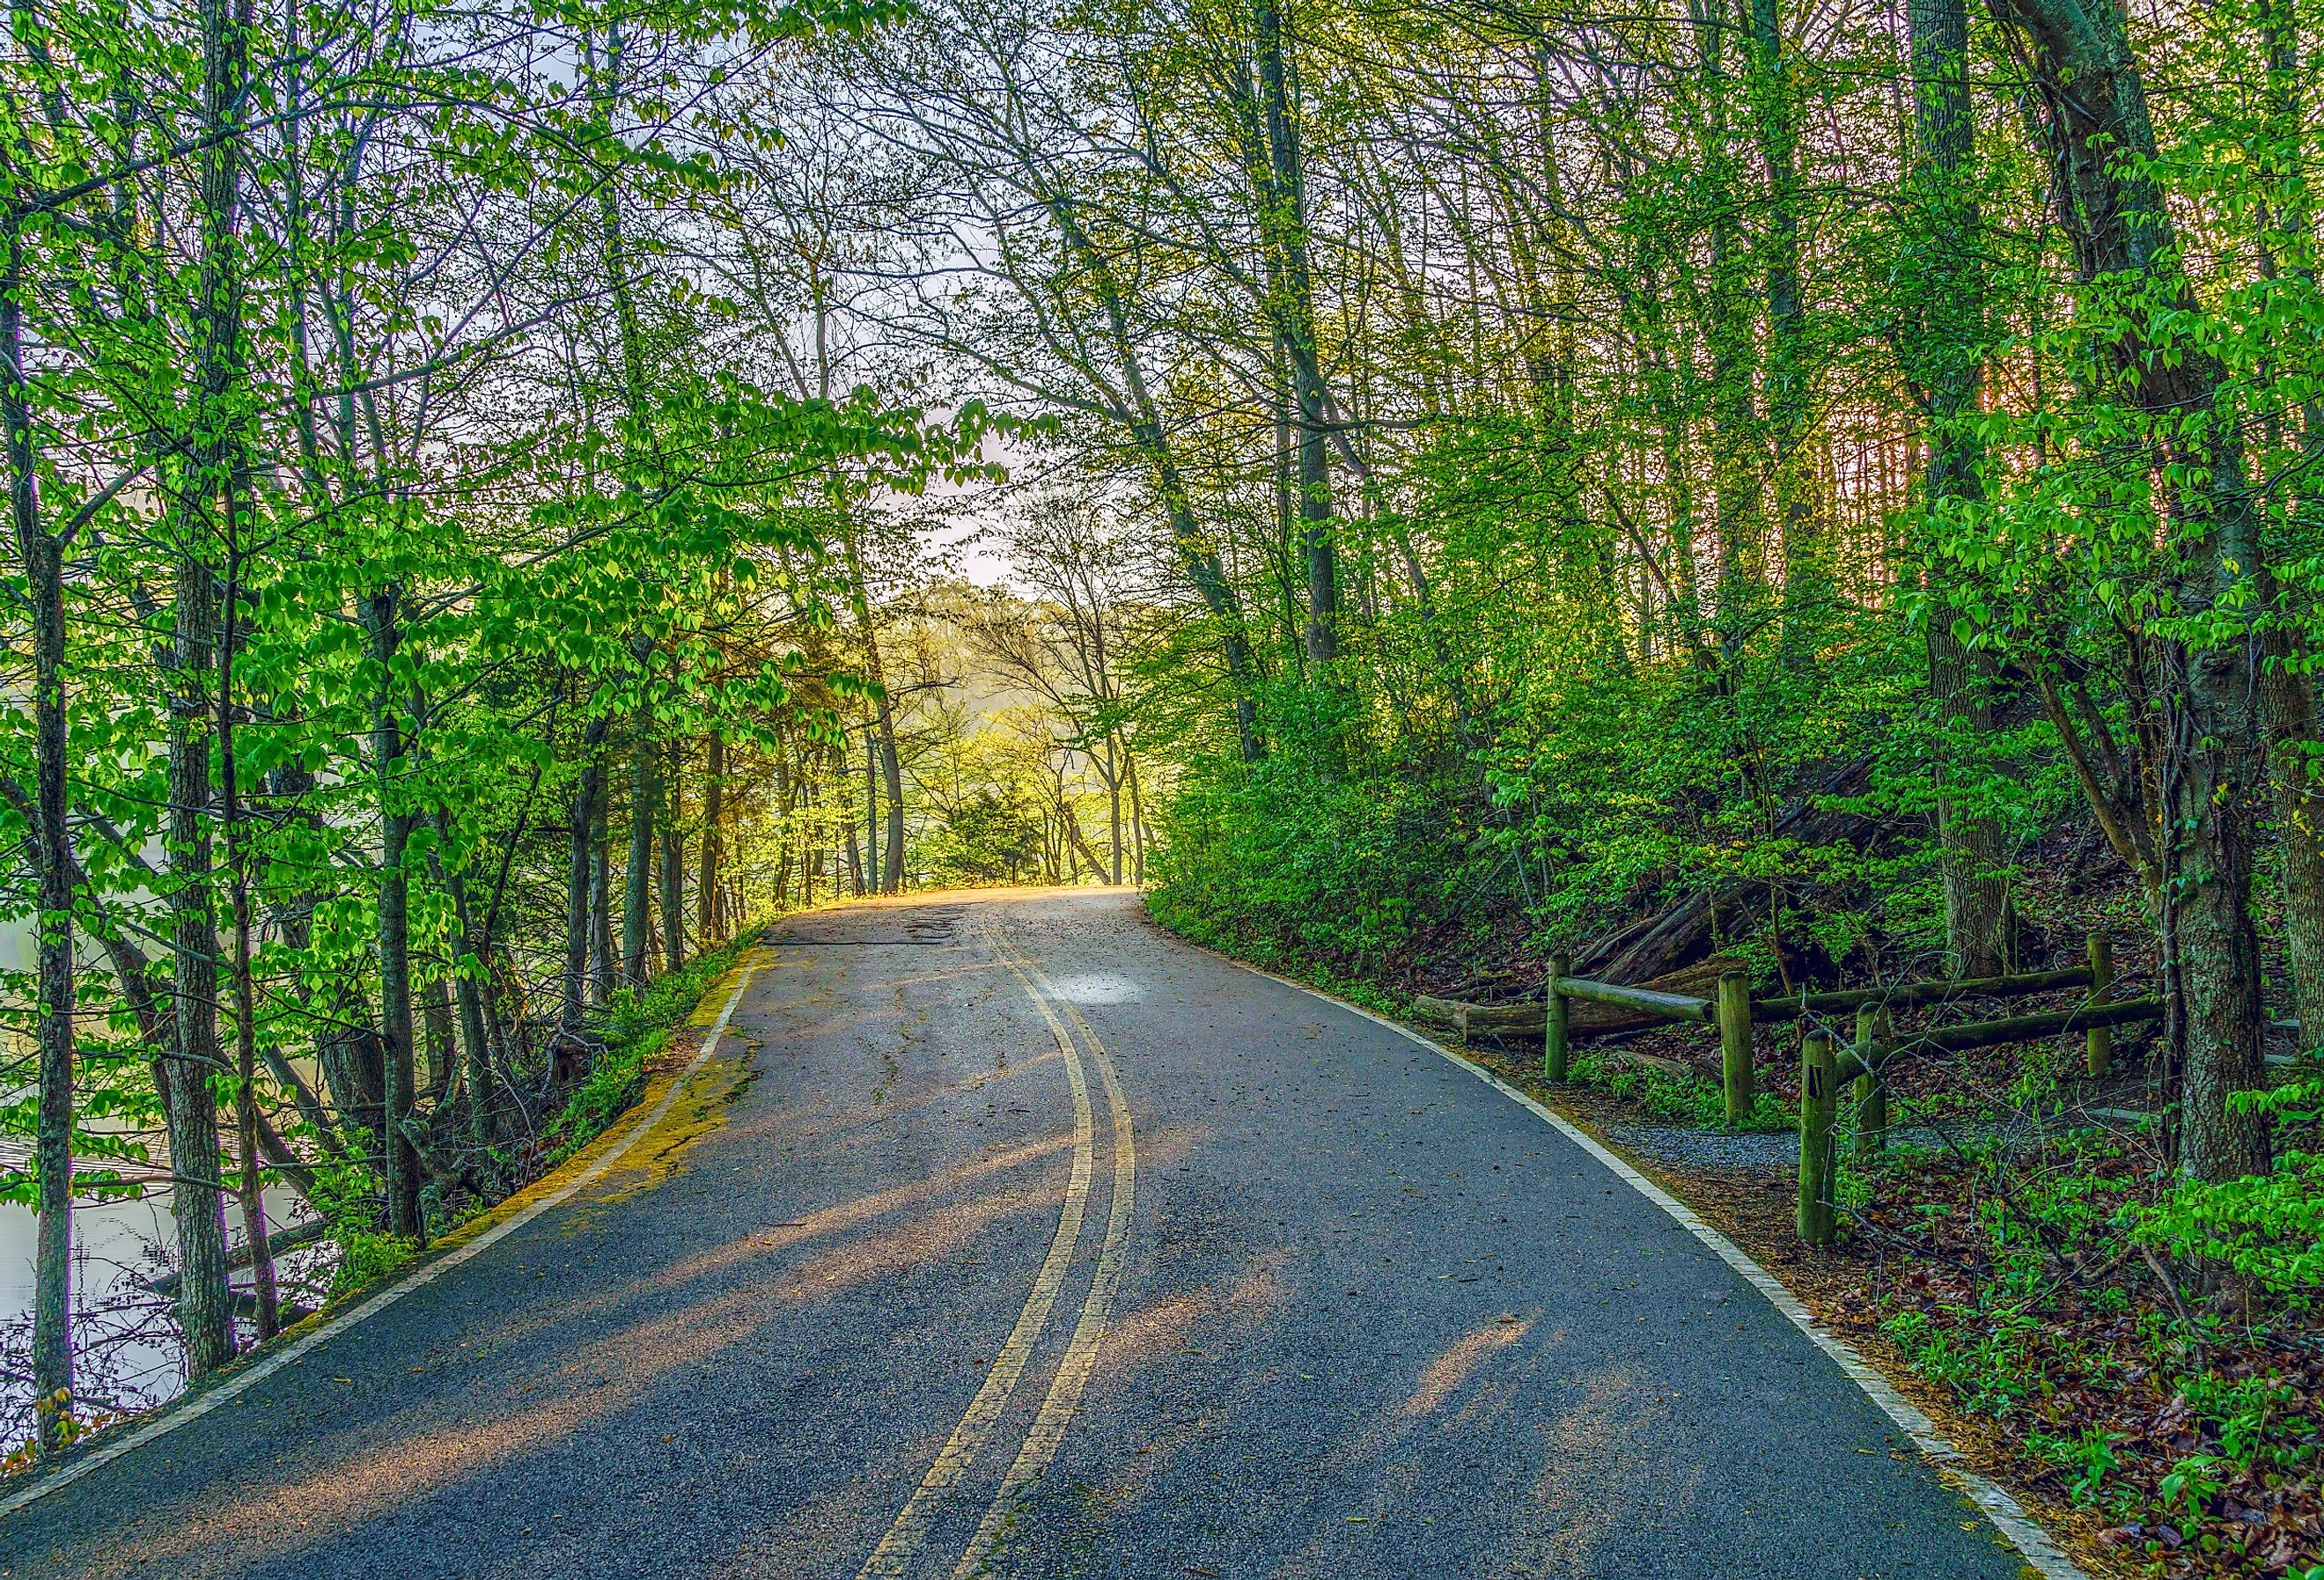 Road on the edge of Radnor Lake near Nashville, Tennessee. Image credit John via AdobeStock.